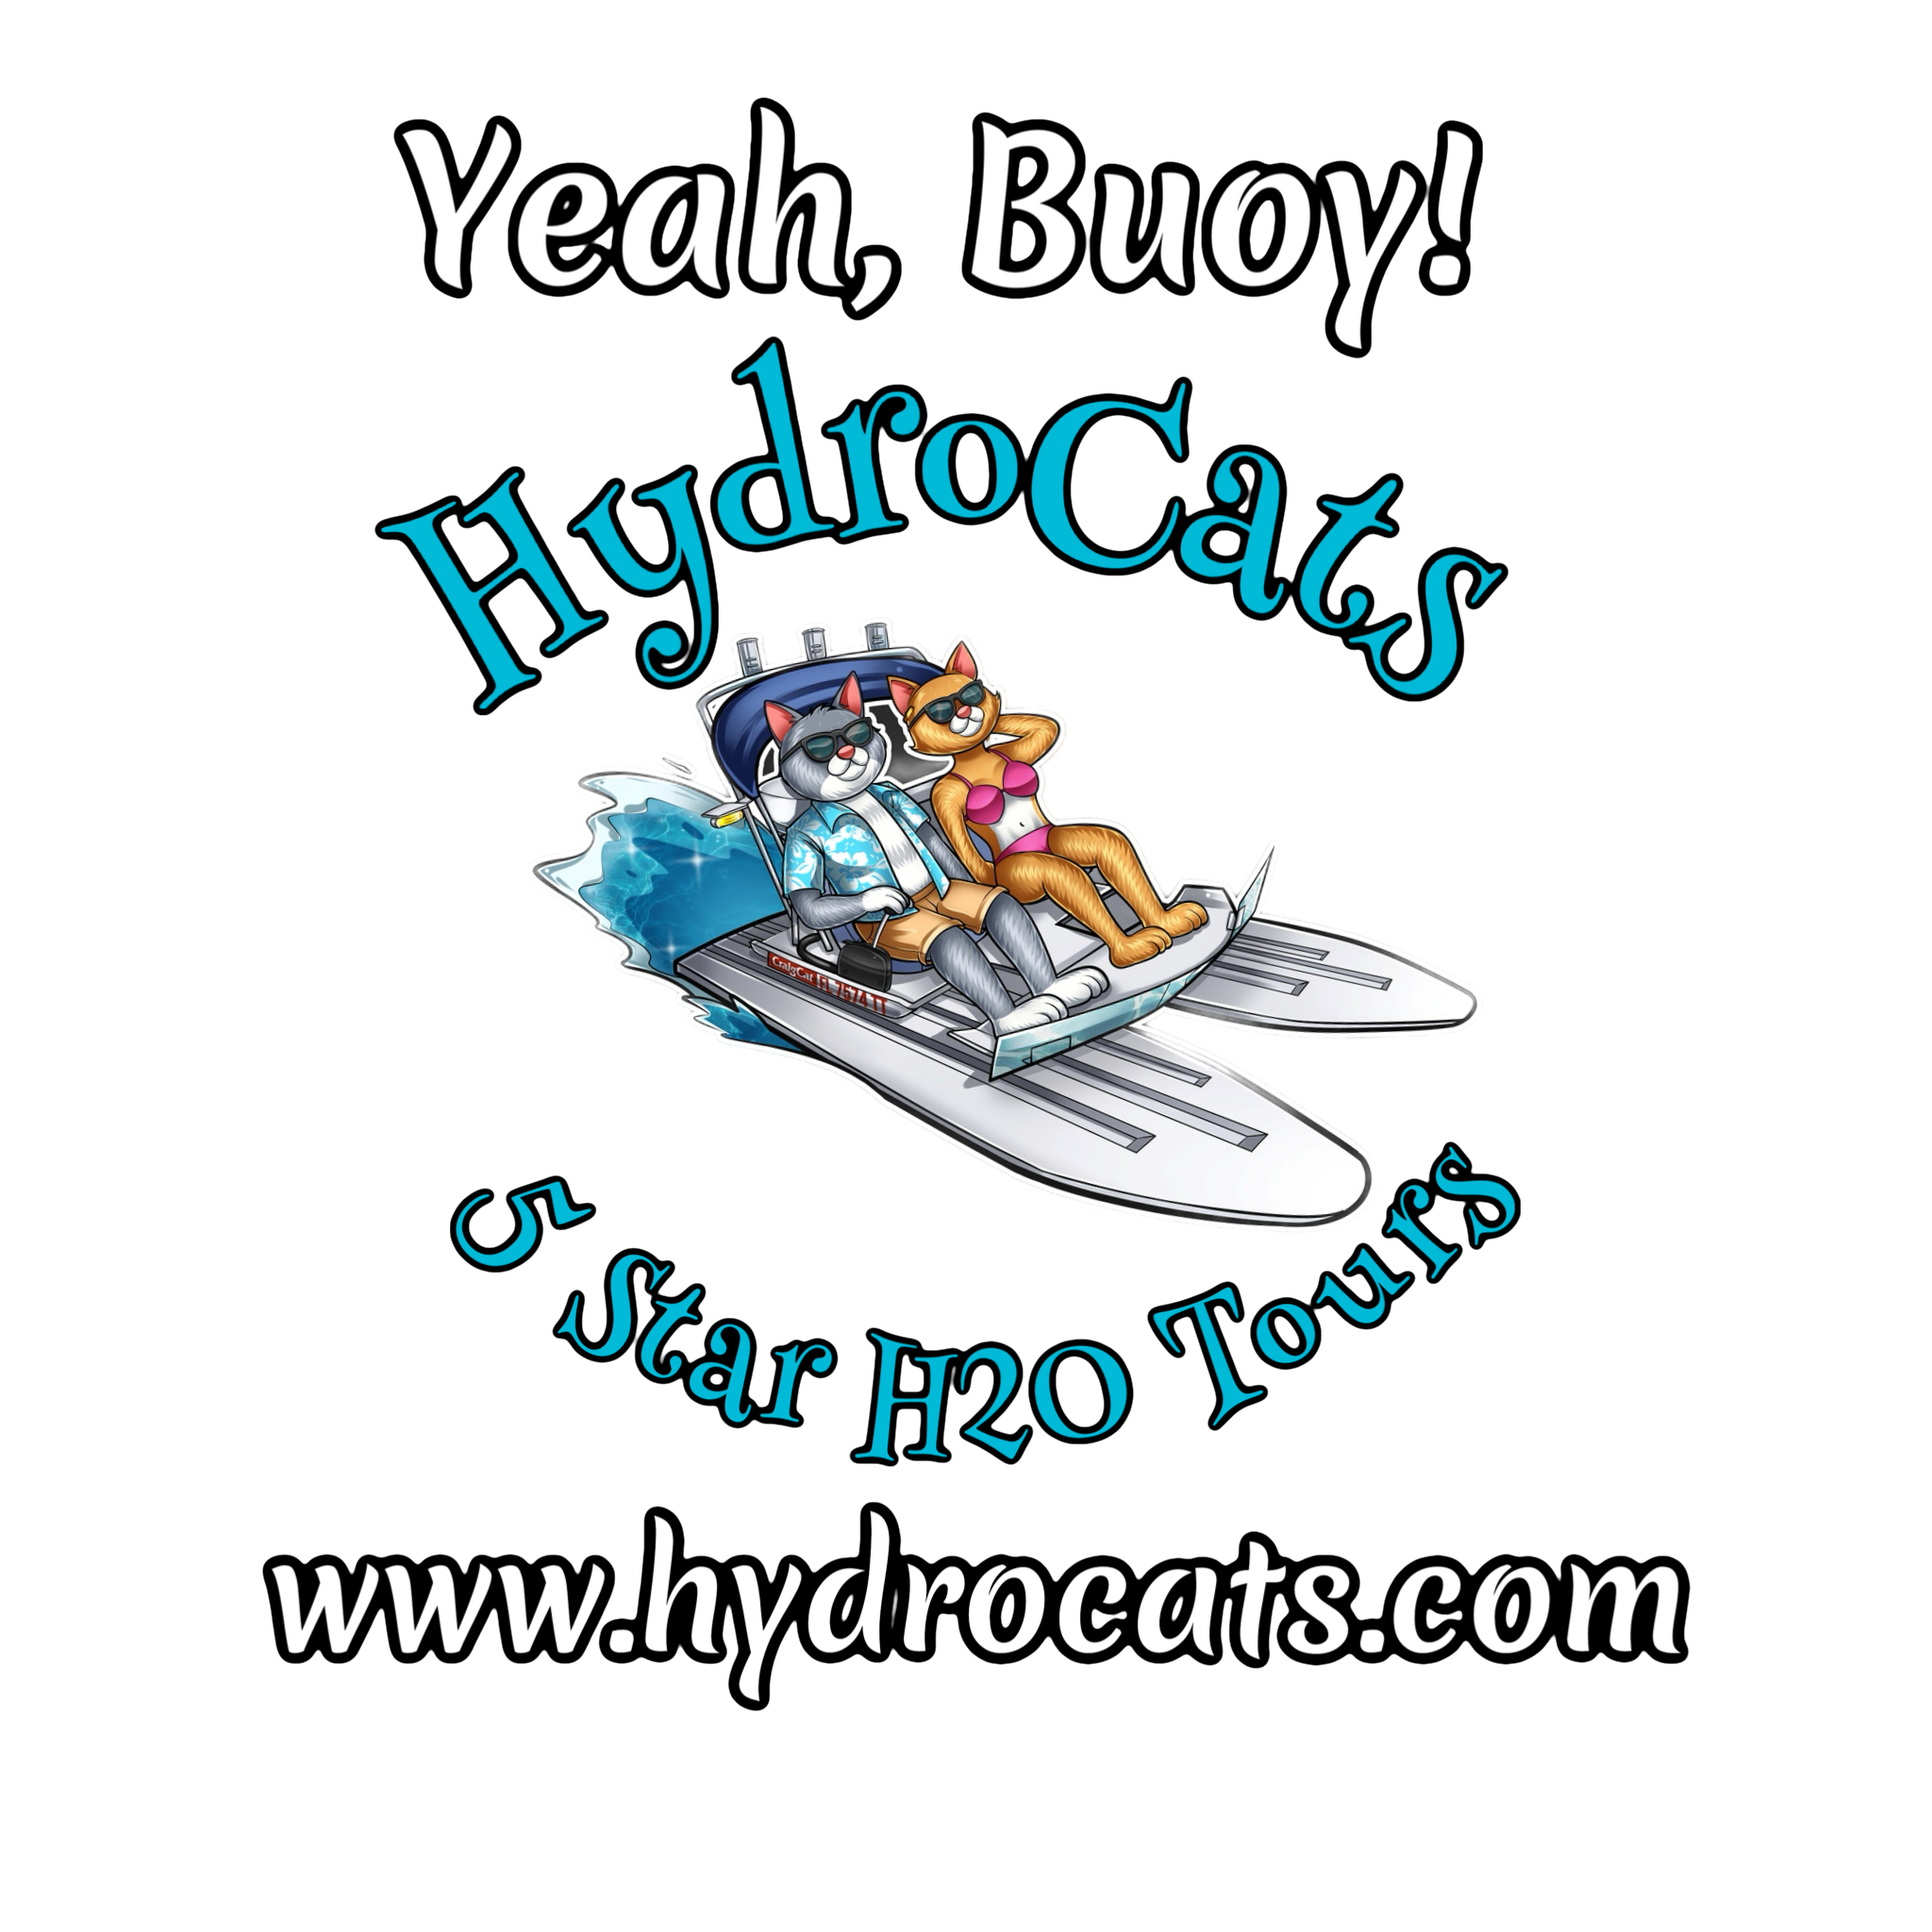 HydroCats